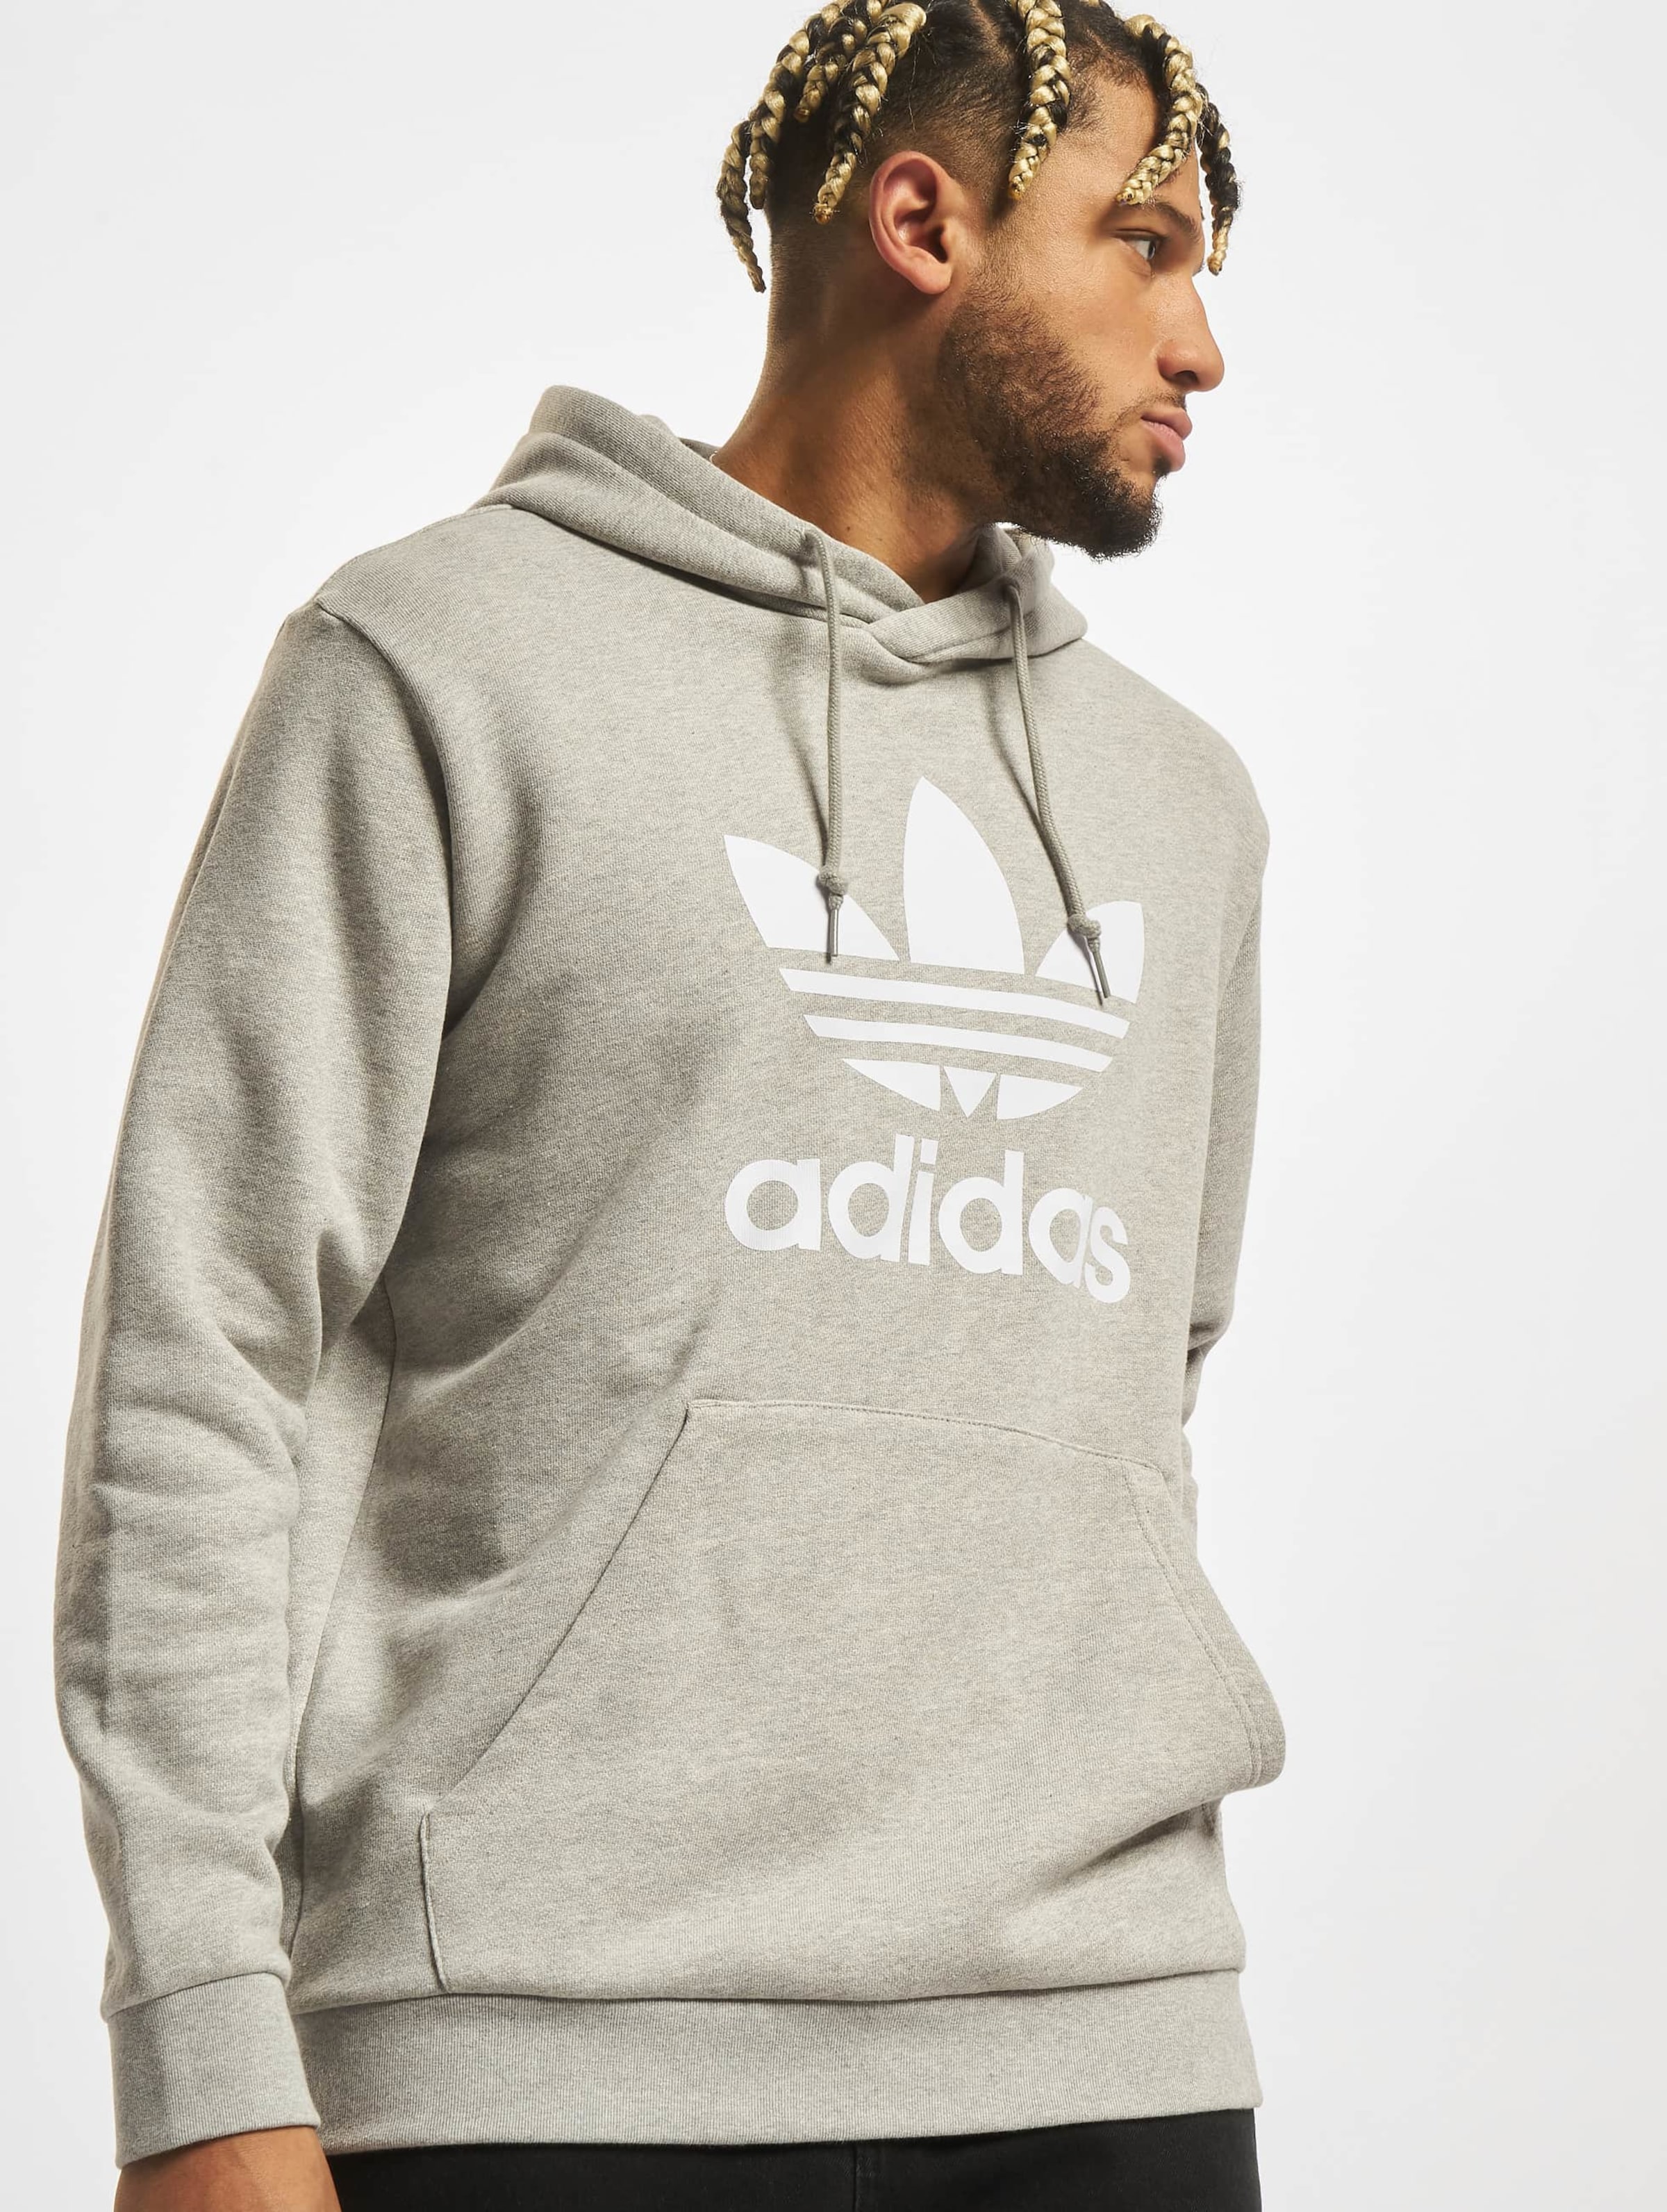 adidas Originals Adidas Trefoil Hoody Mannen op kleur grijs, Maat 2XL